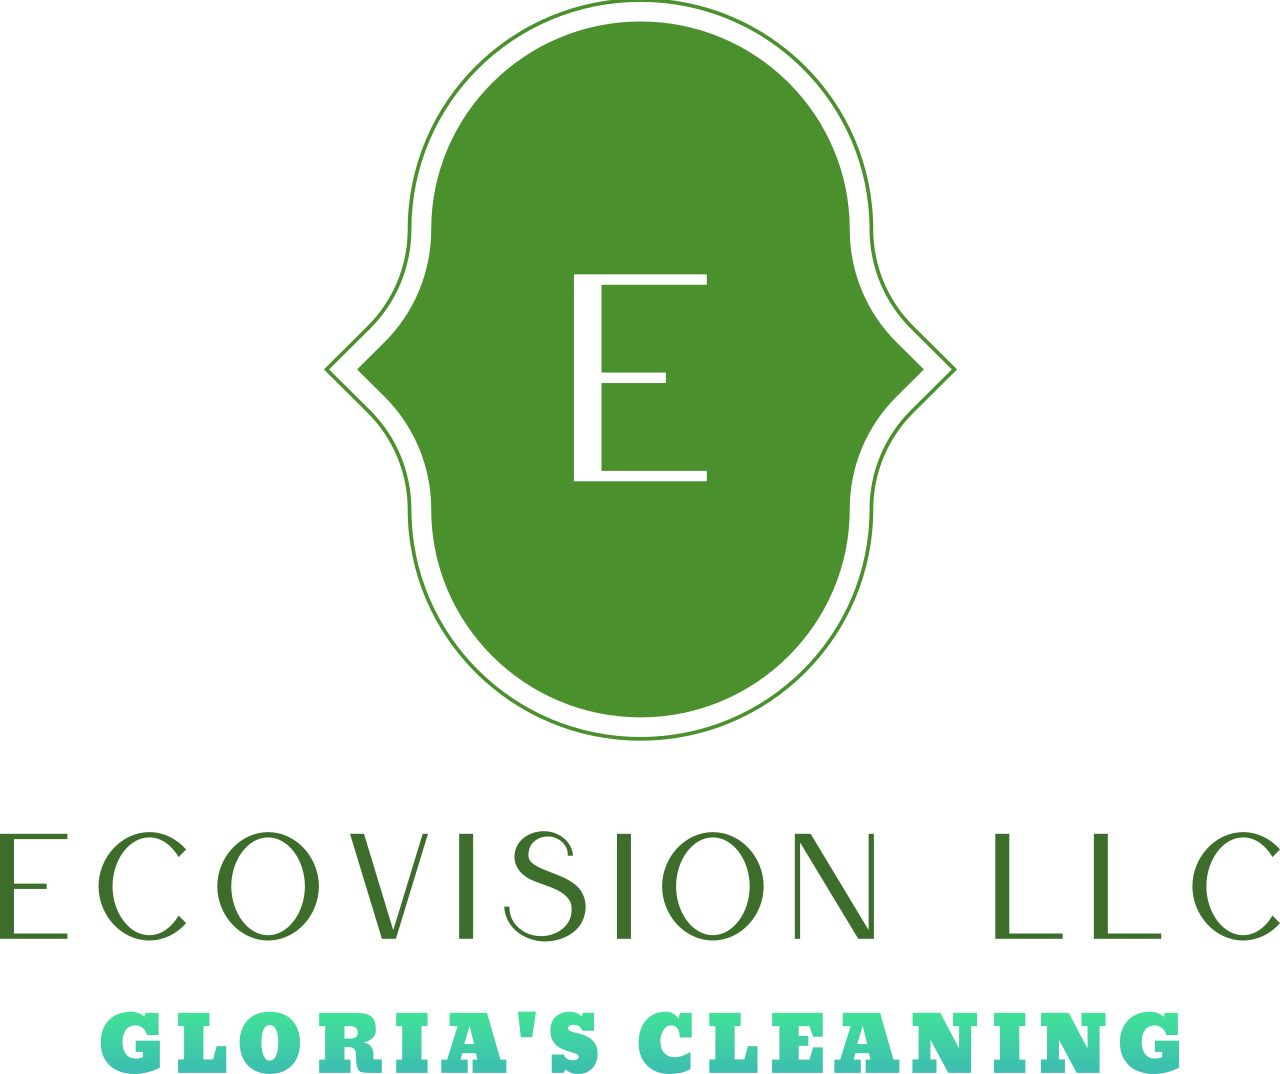 ECOVISION LLC's logo